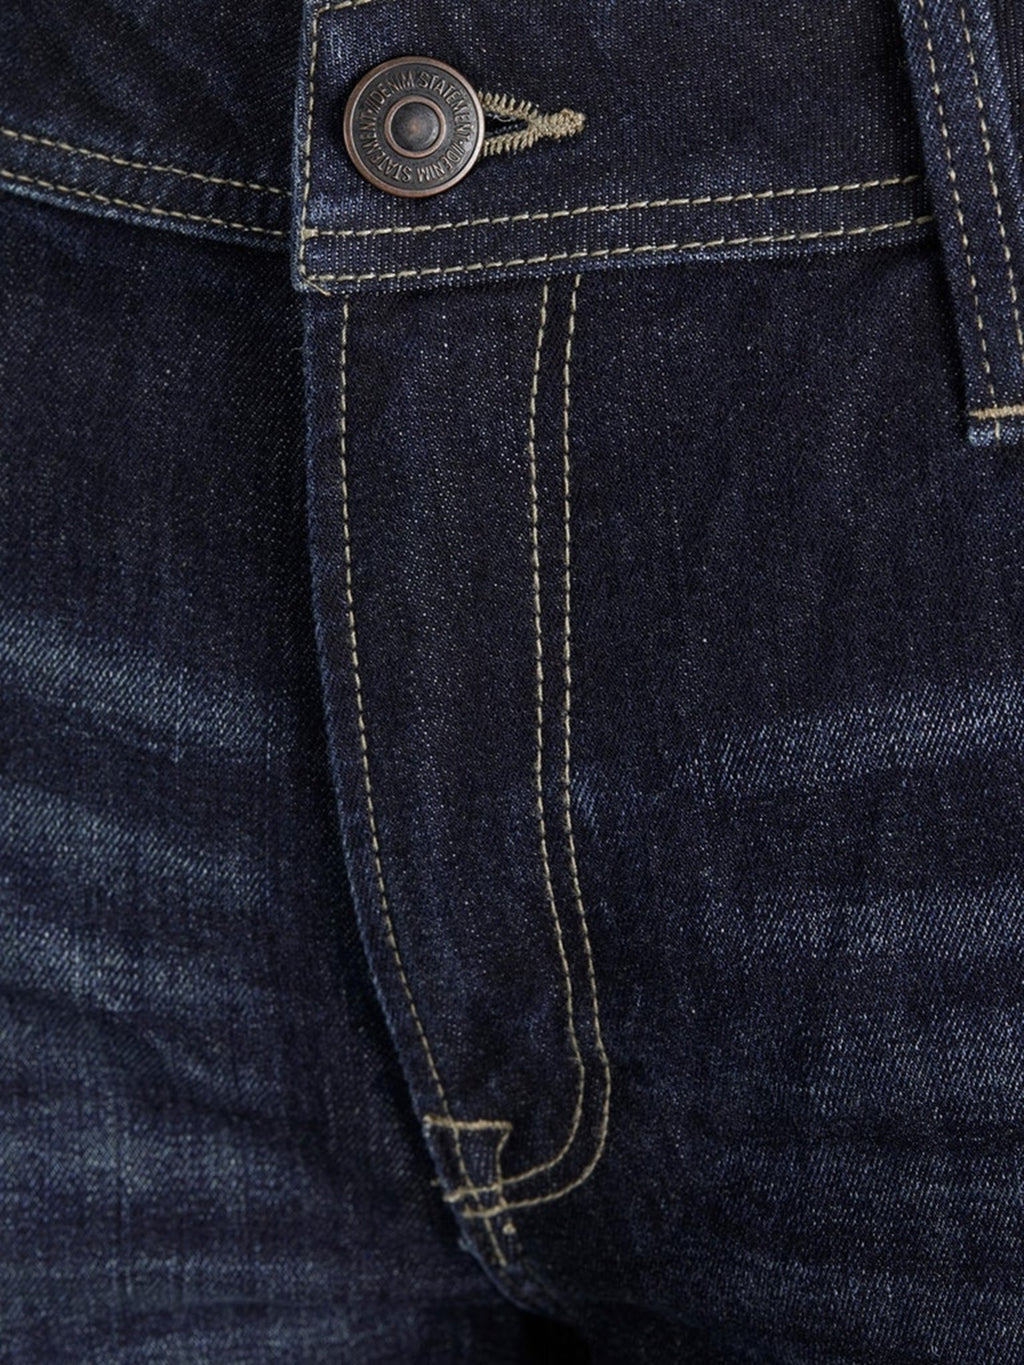 Performance Jeans (Slim) - Dark Blue Denim